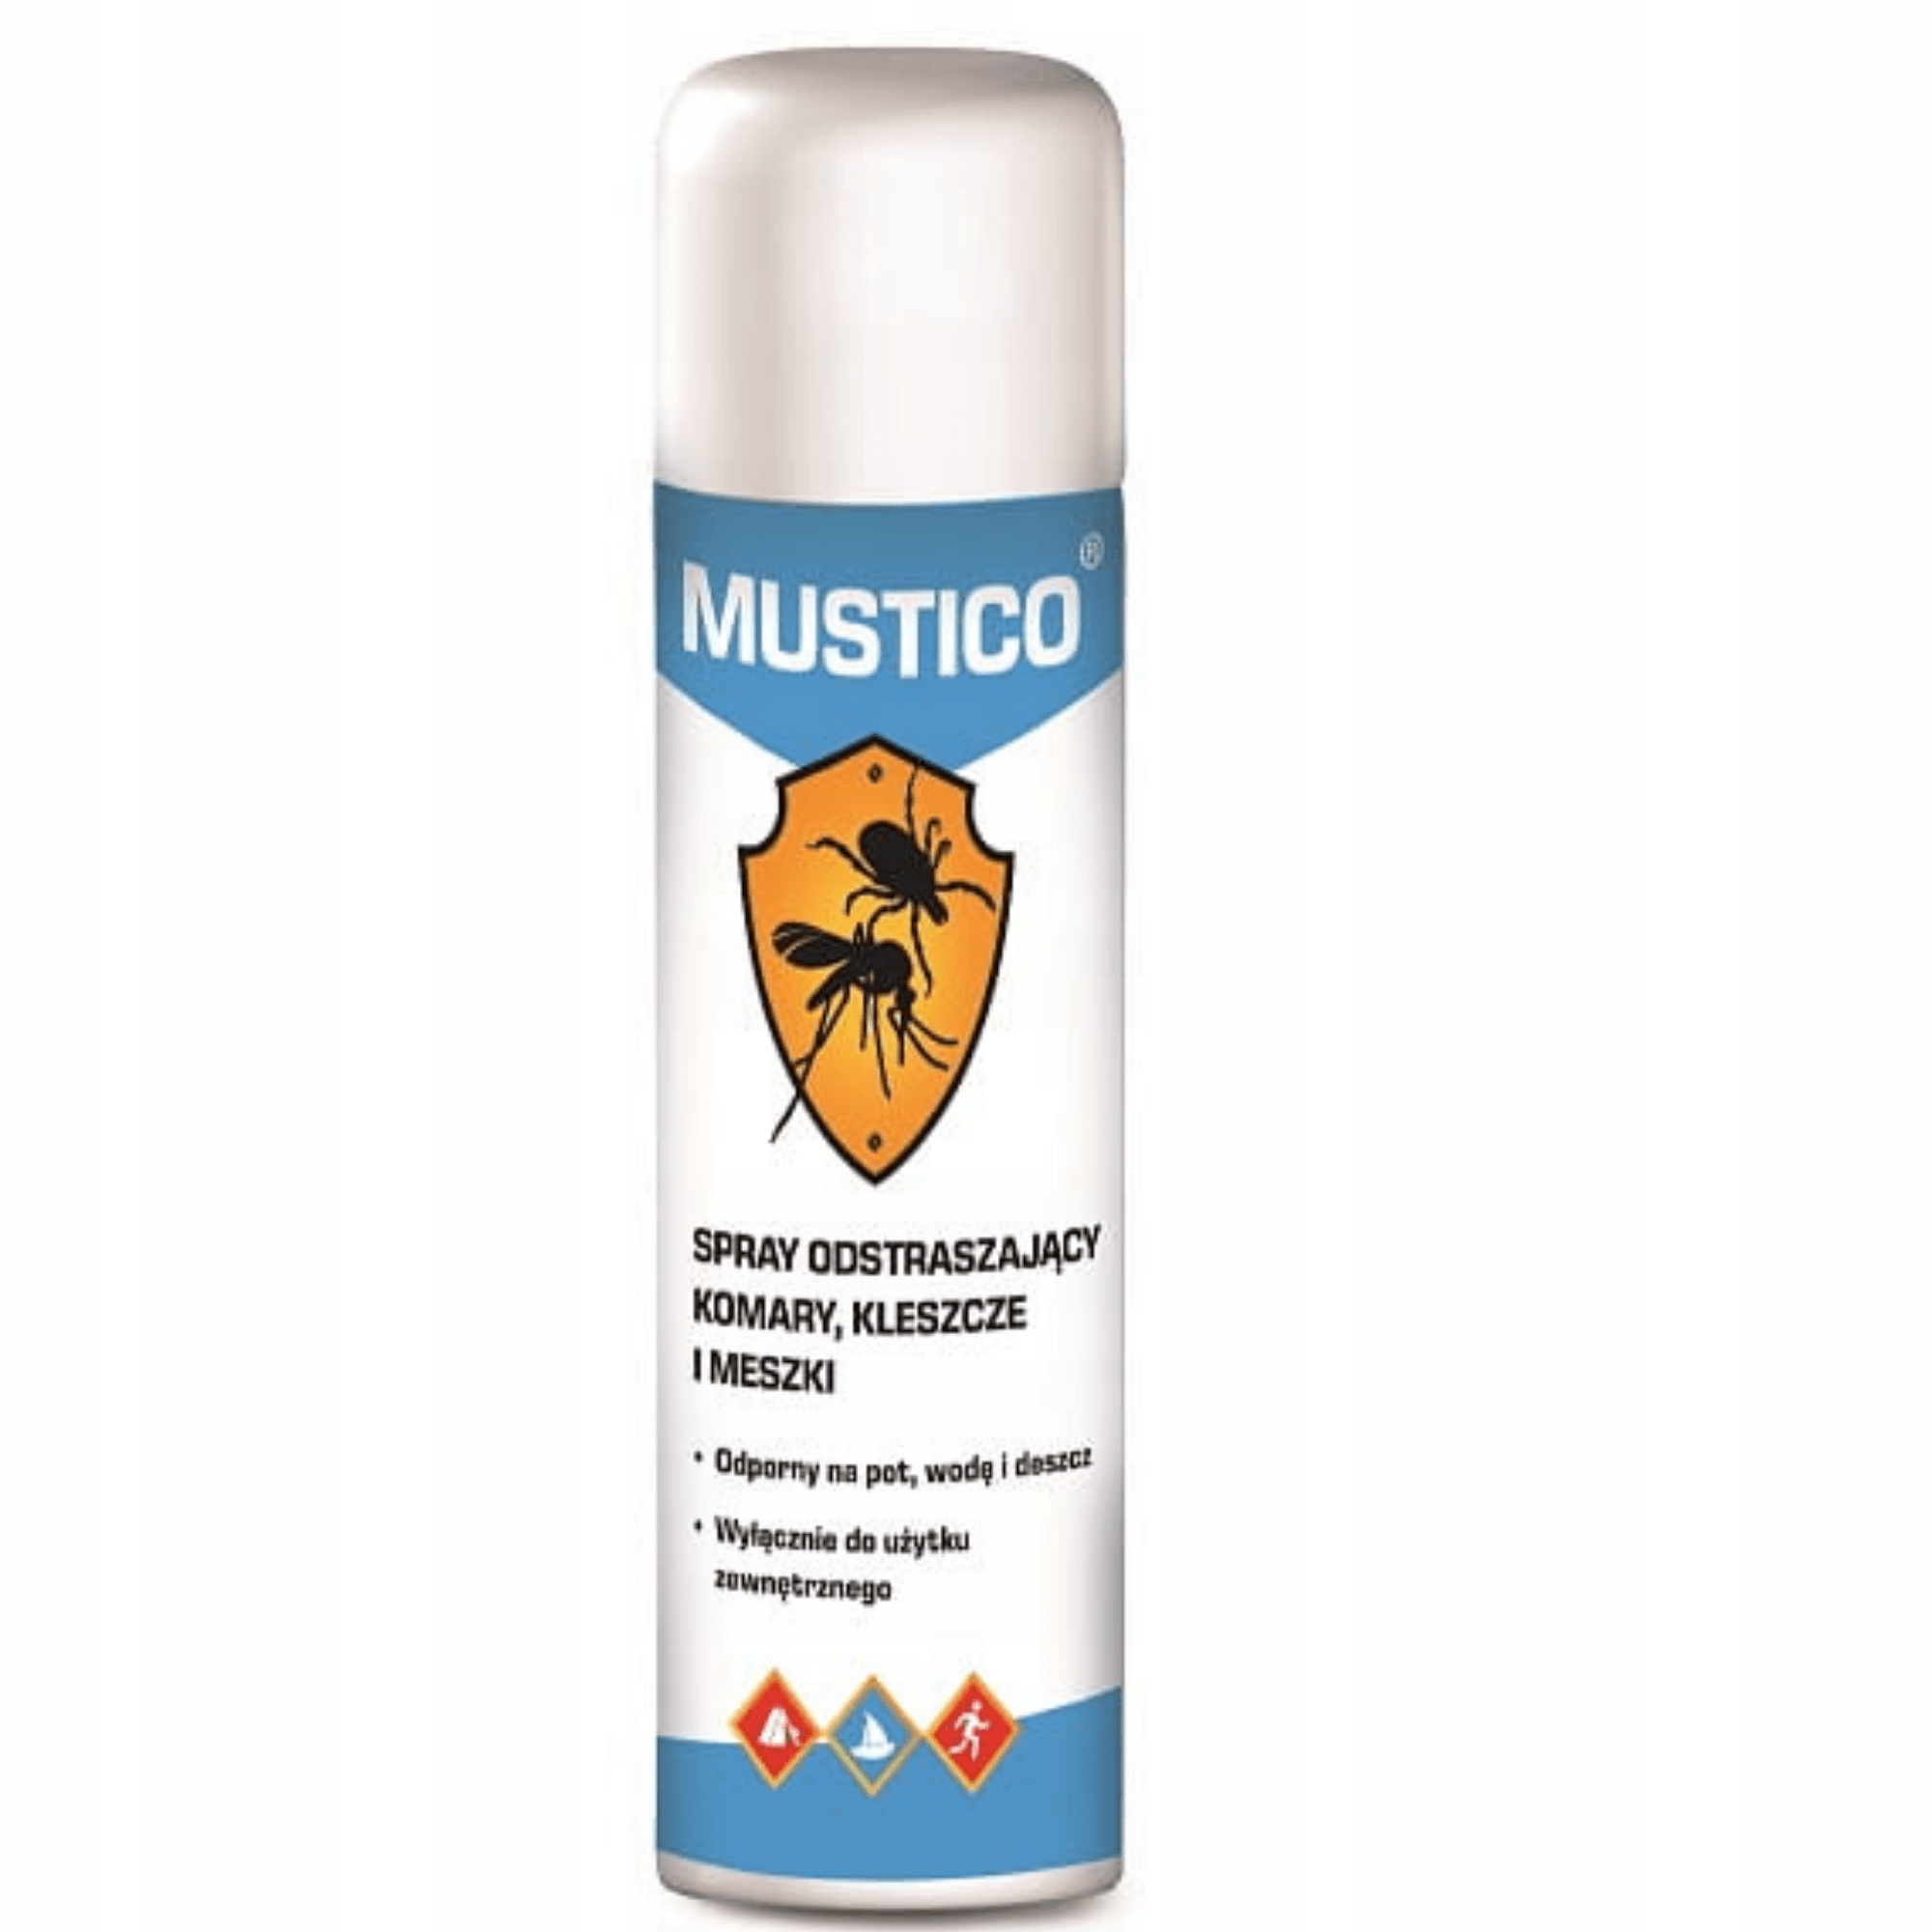 Mugico Spray для комаров, клещей, 100 мл вспышки